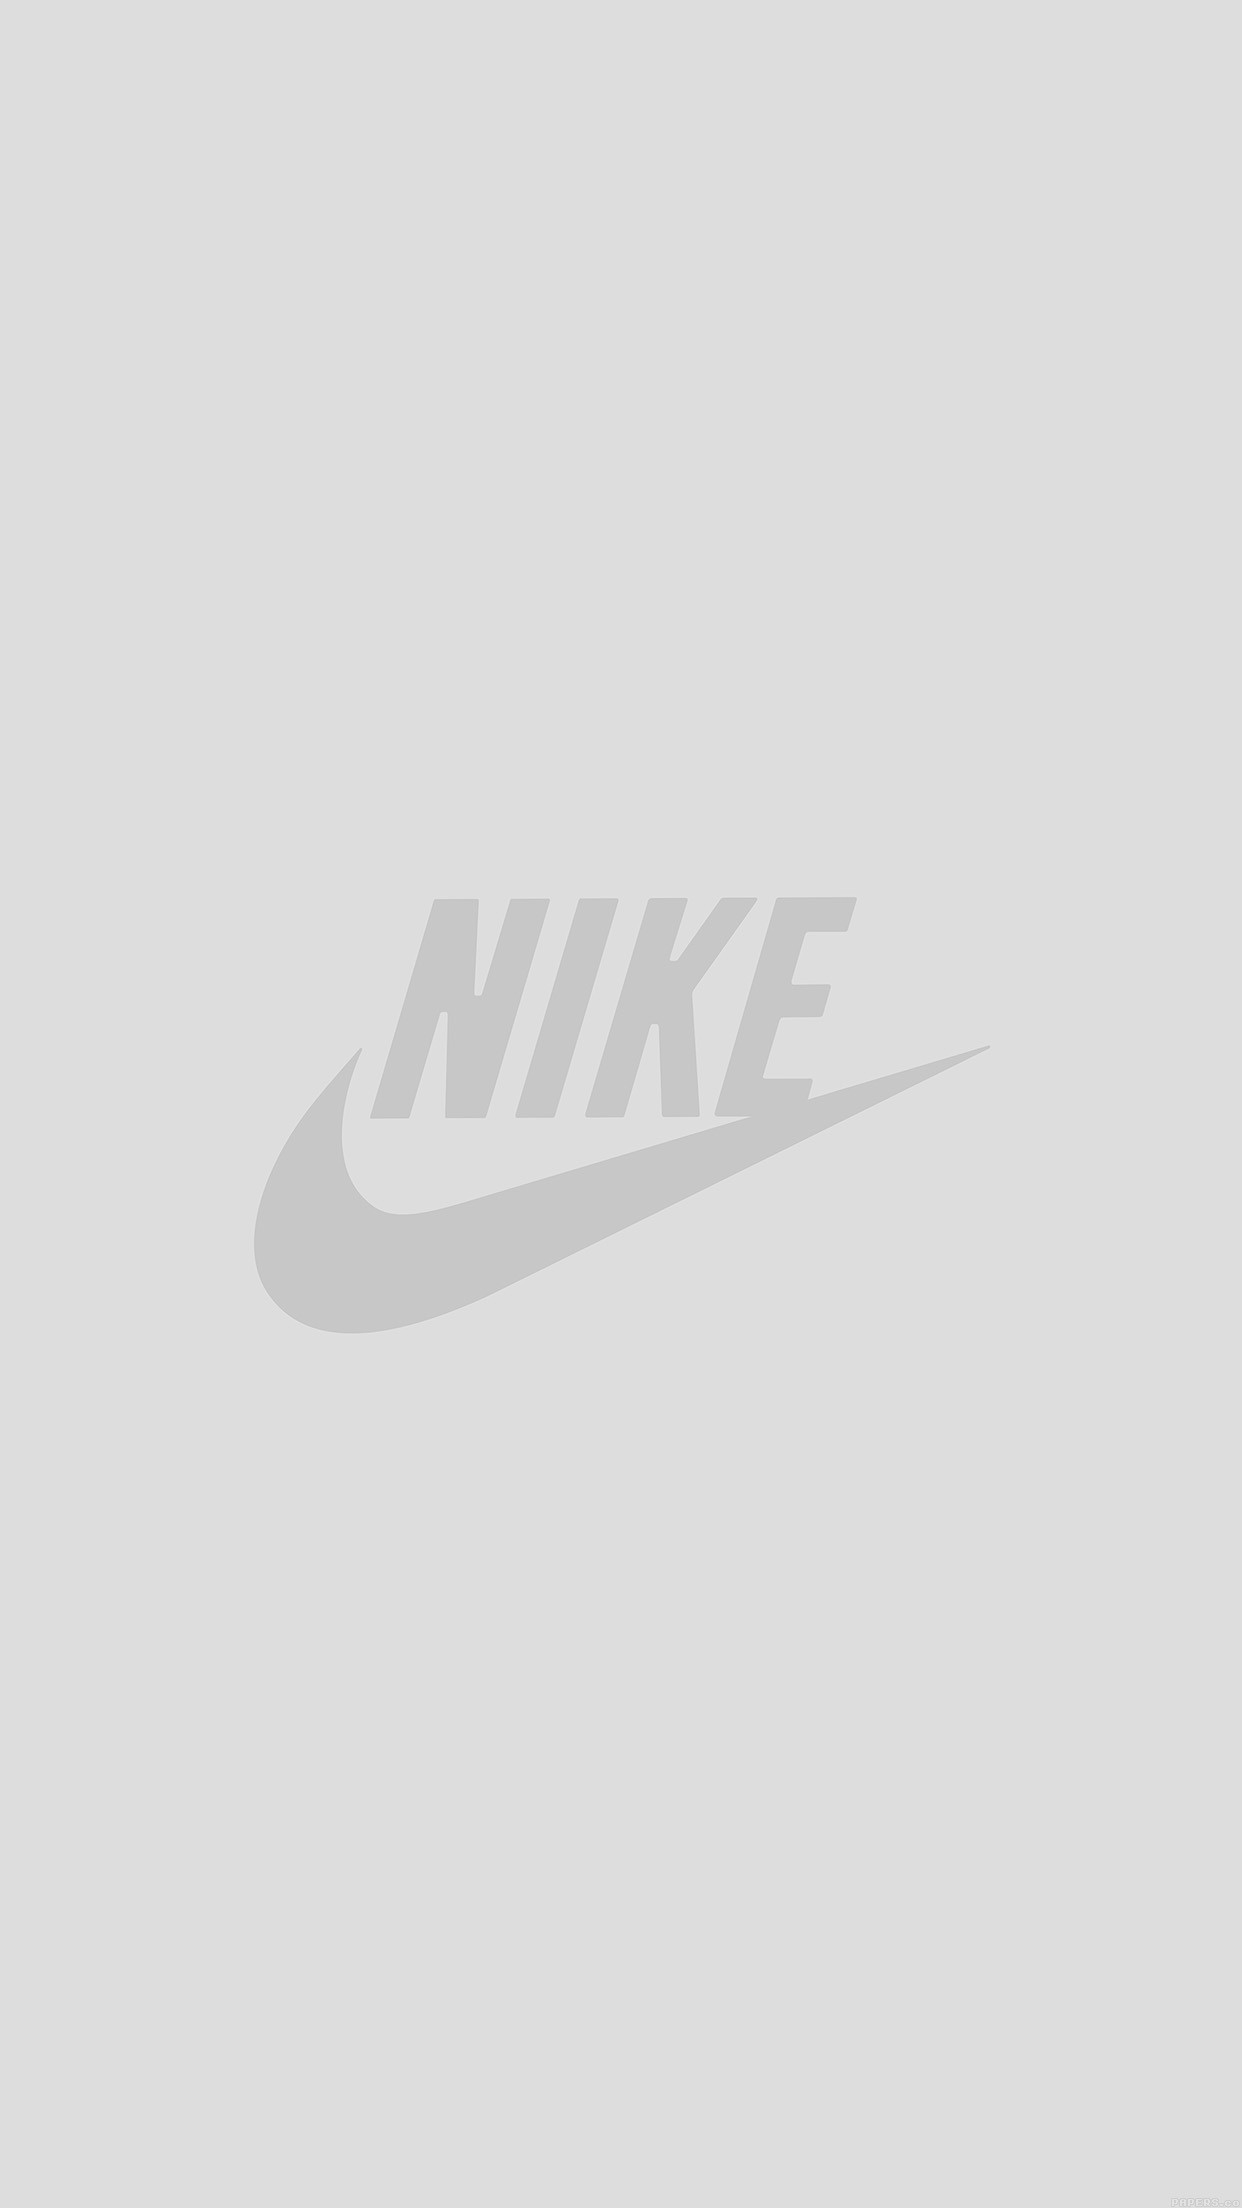 1242x2208 Nike Logo Sports Art Minimal Simple White